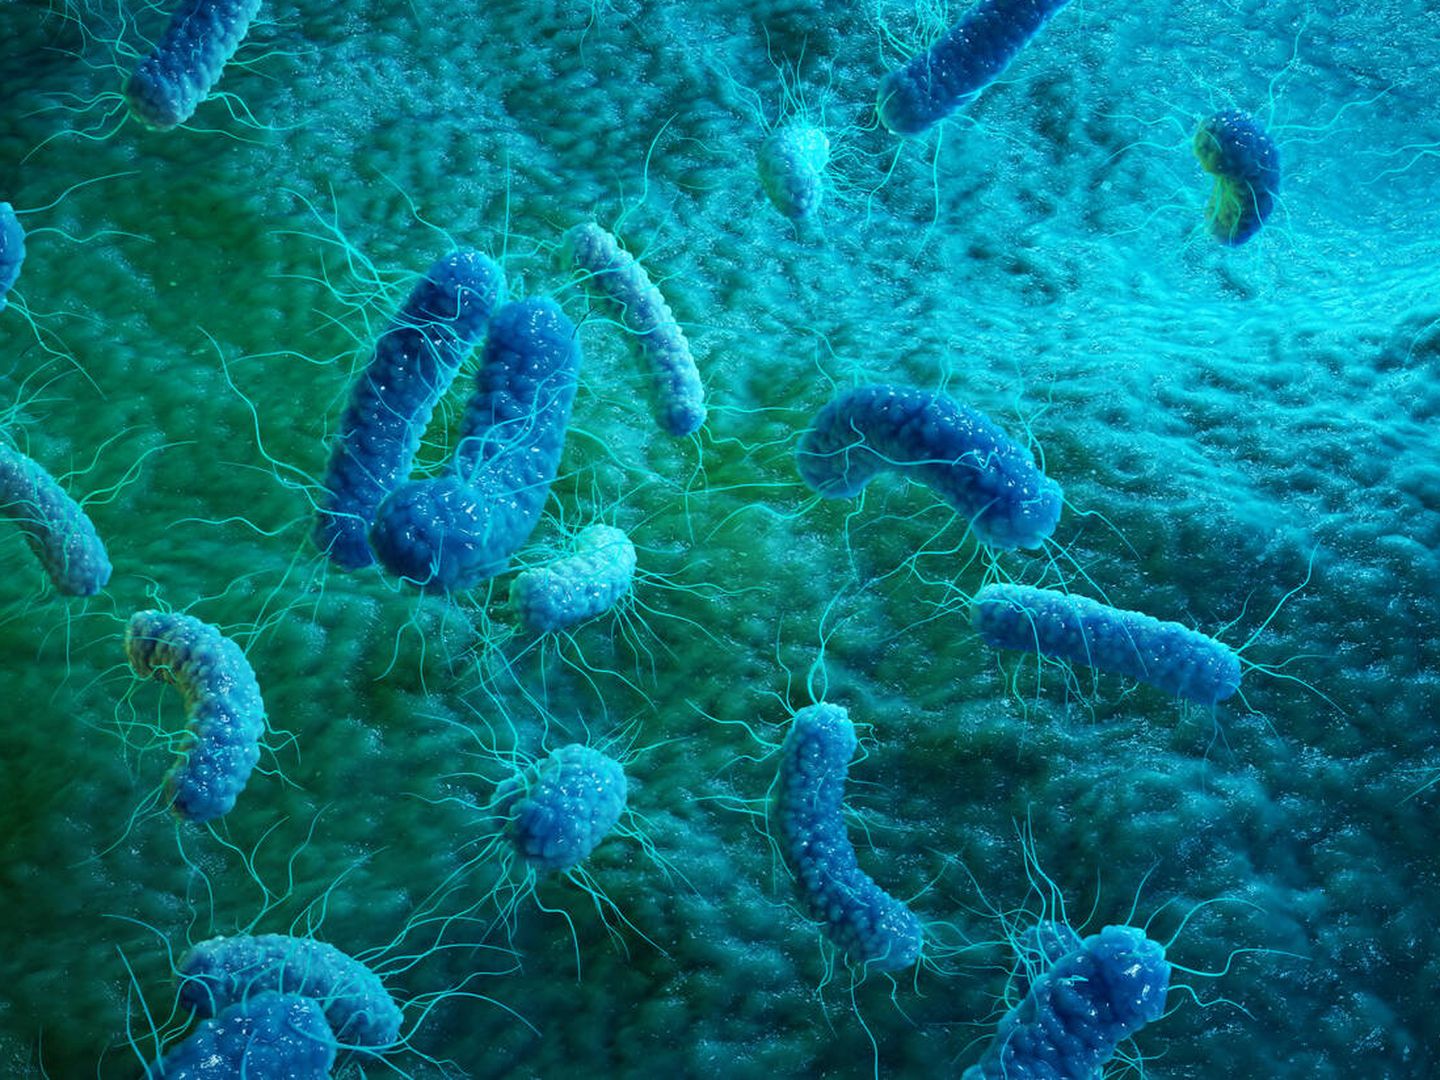 Bacterias negativas. (iStock)